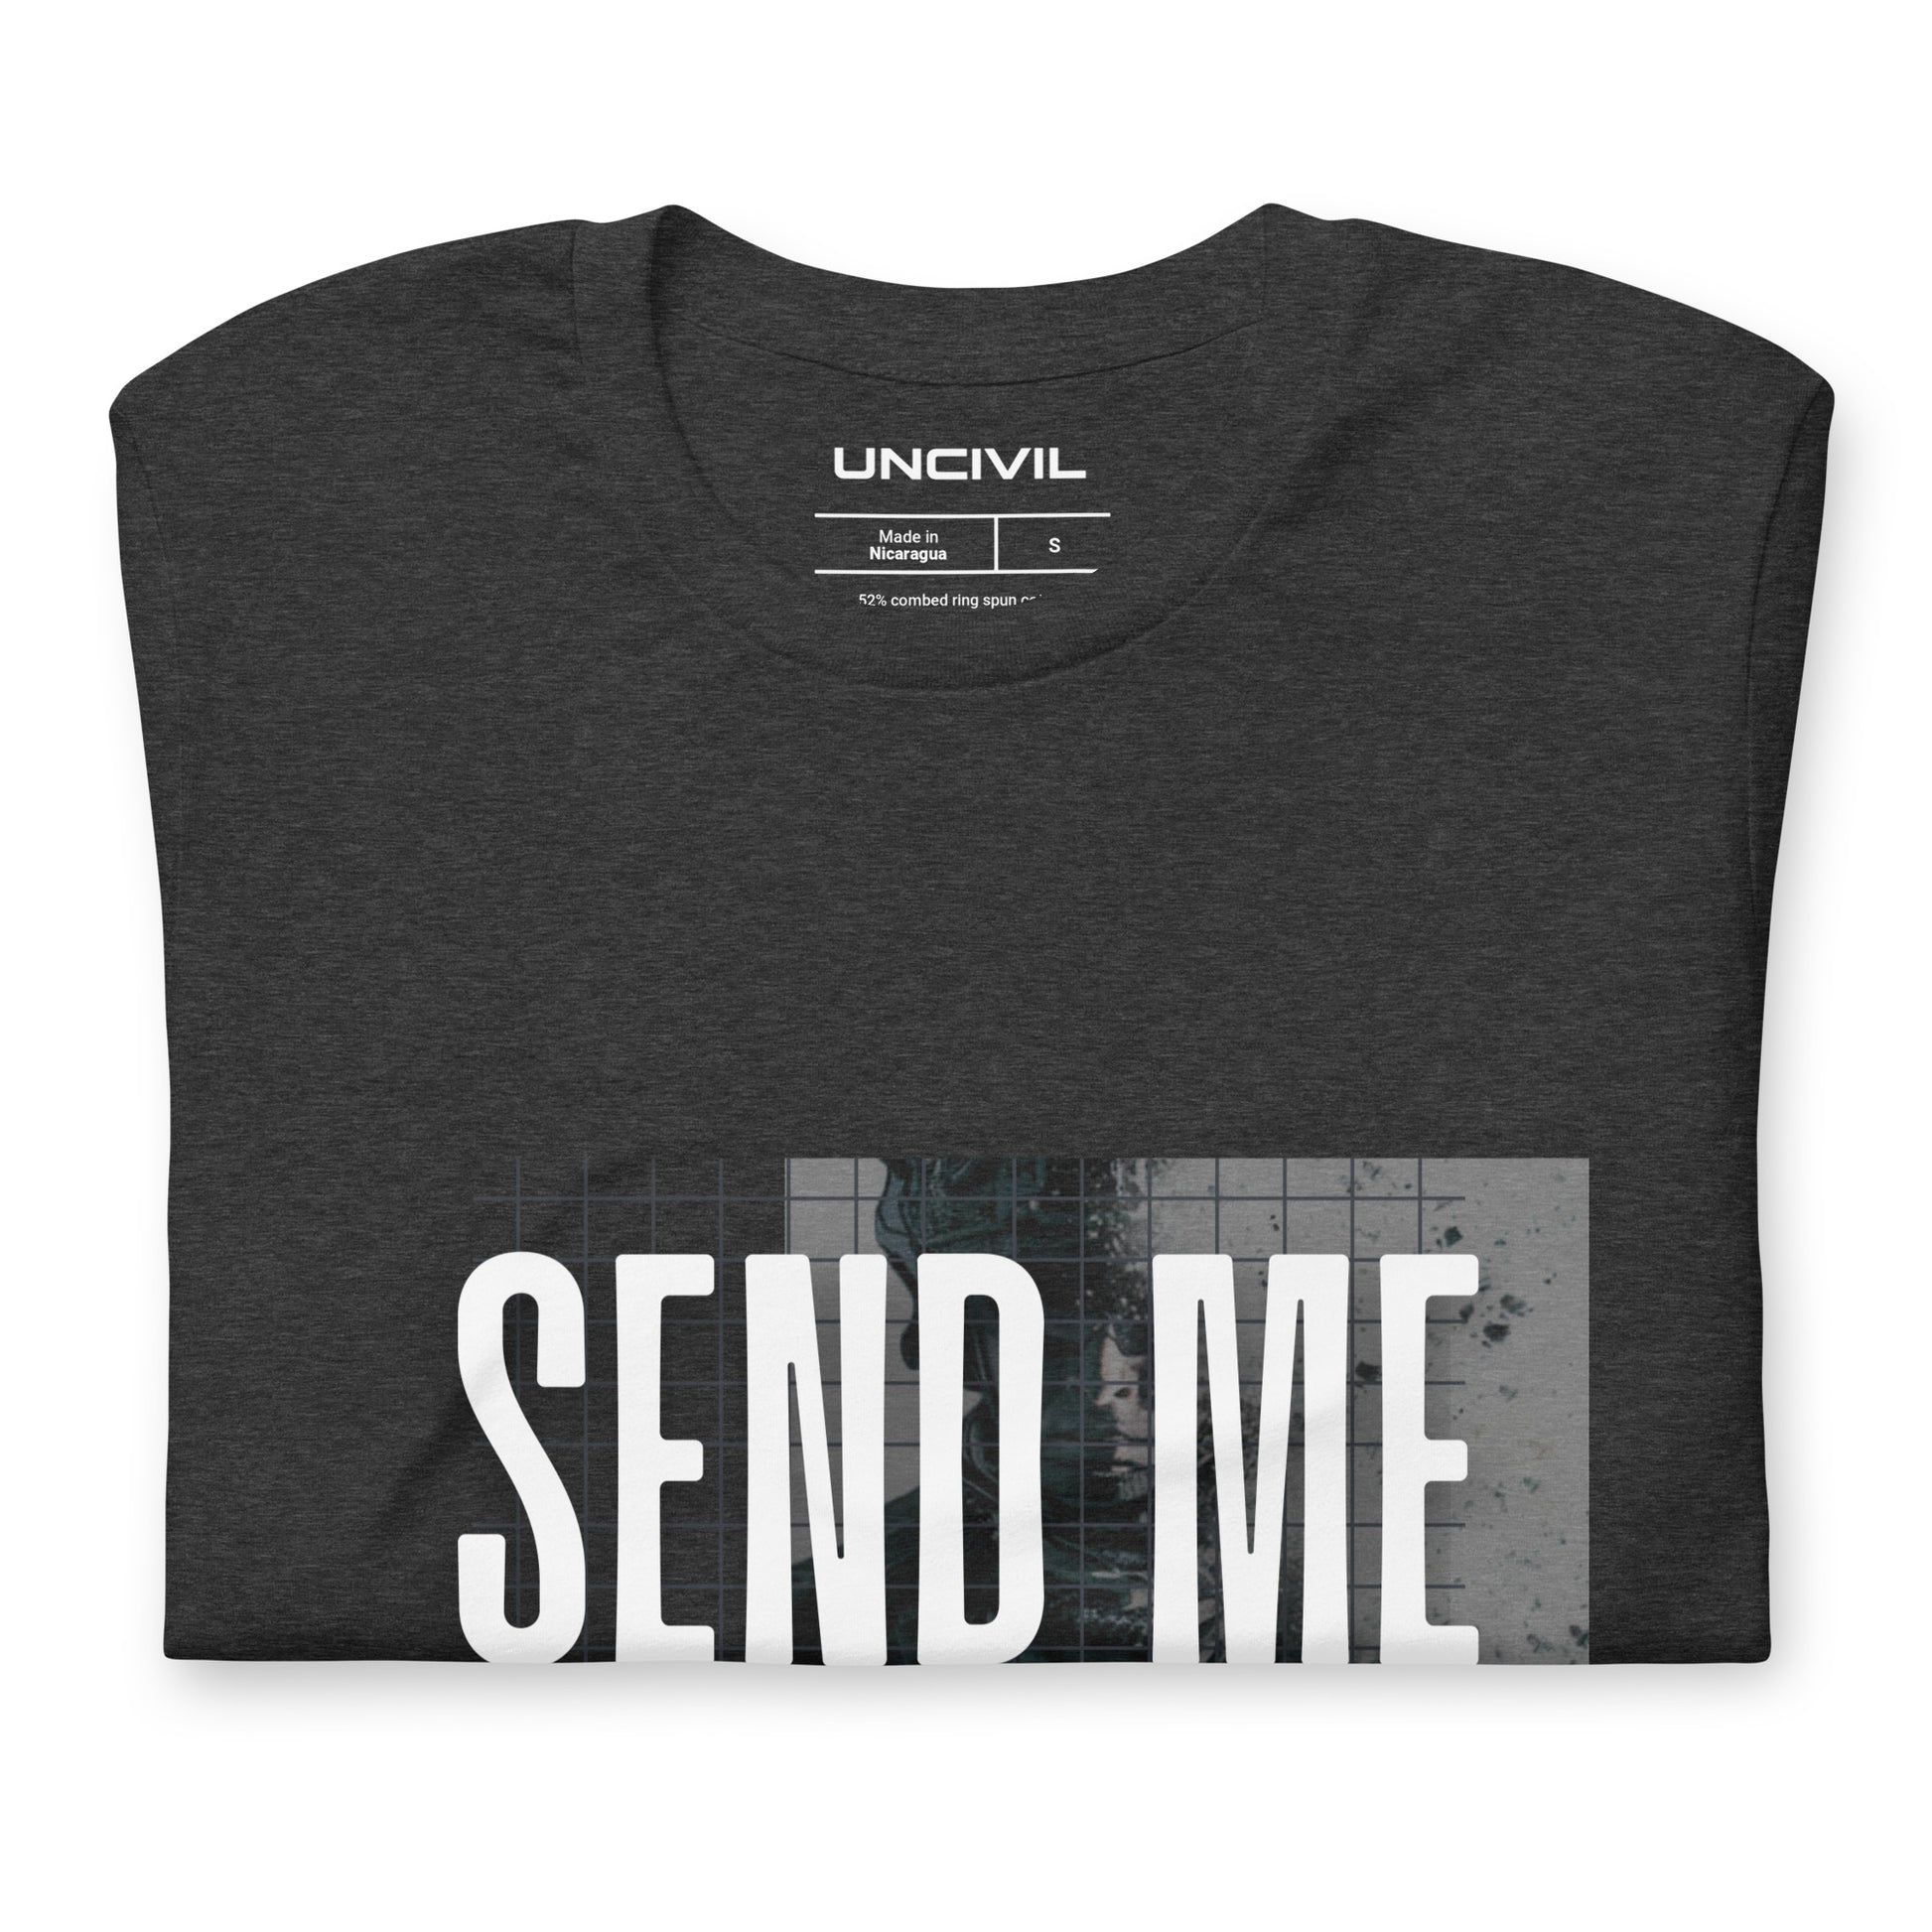 Send Me Isaiah 6:8 shirt, dark grey heather graphic tee featuring a soldier. Men 's shirt.